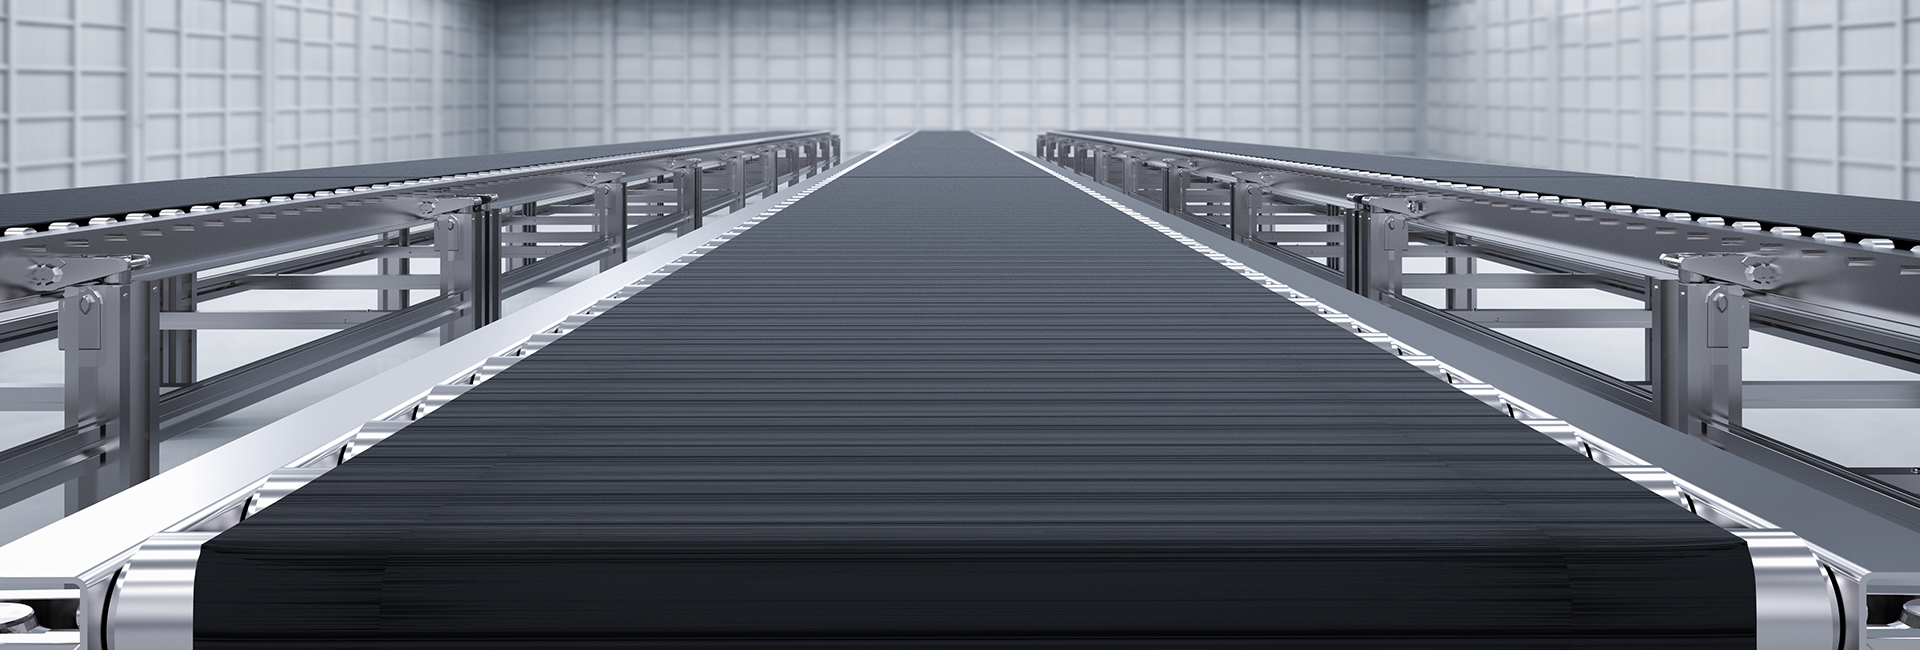 A conveyor belt in a factory.